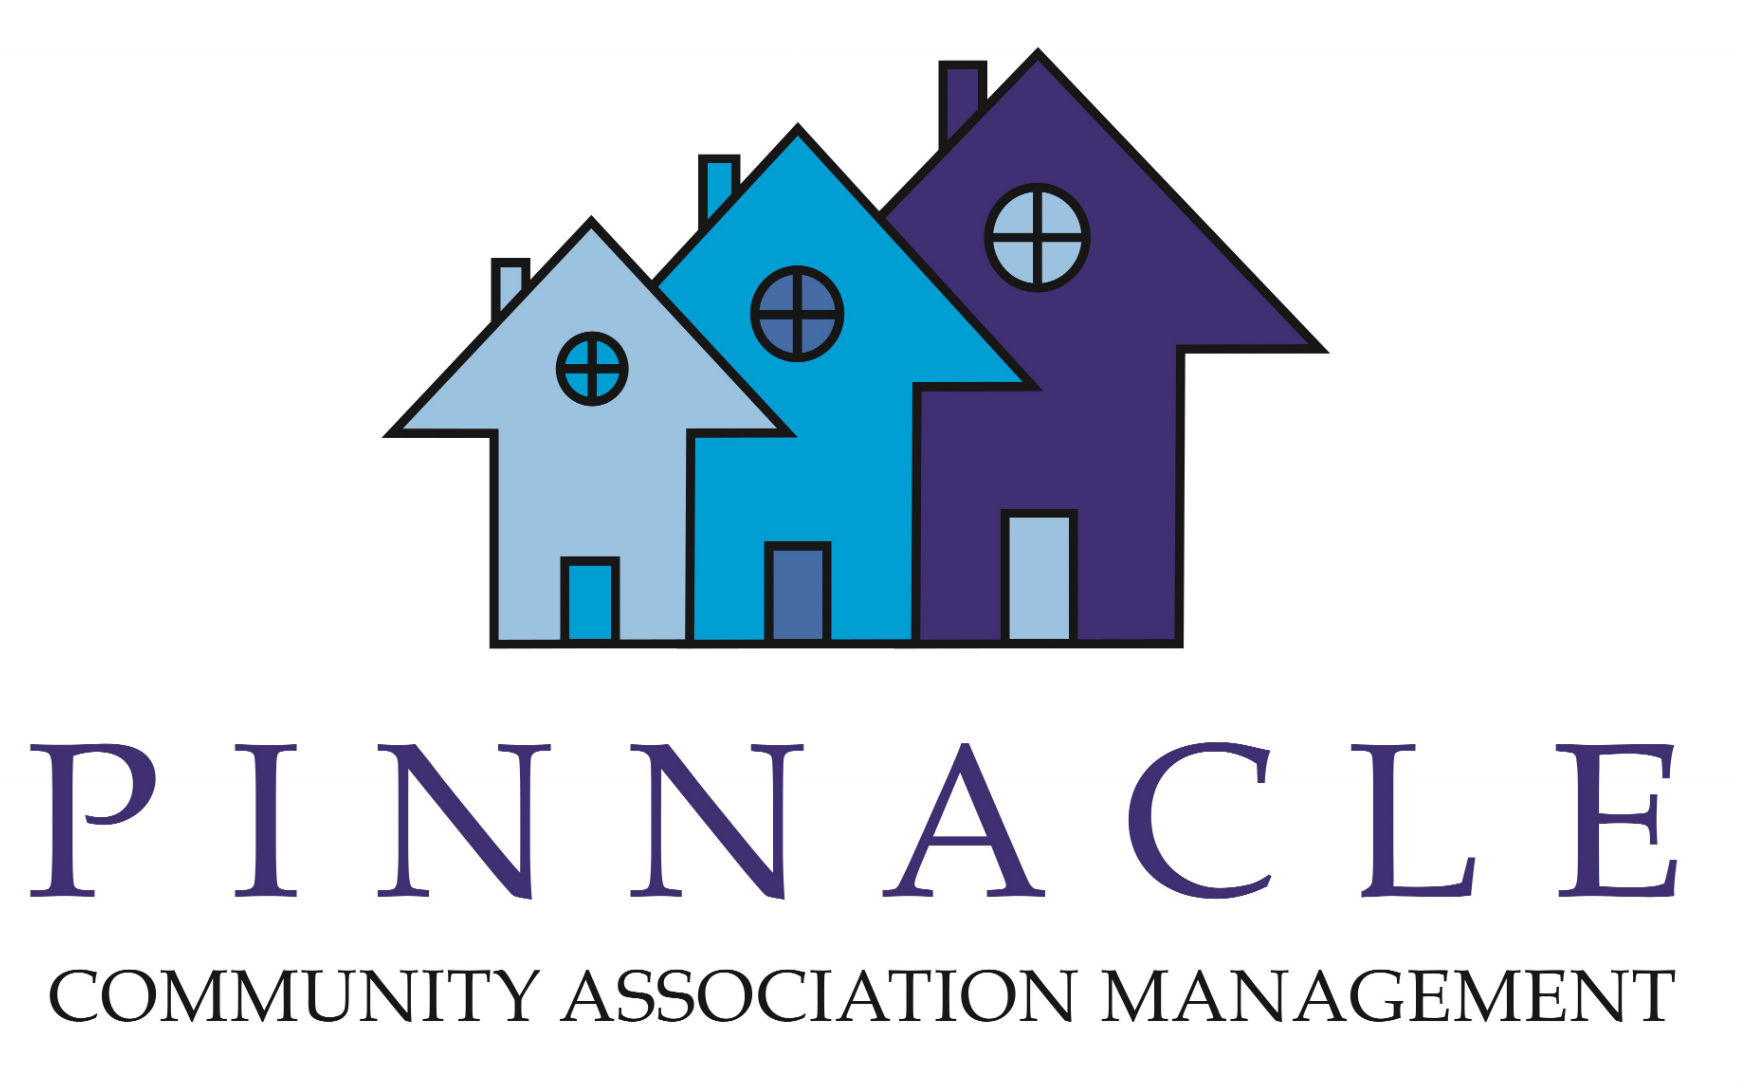 Pinnacle Community Association Management